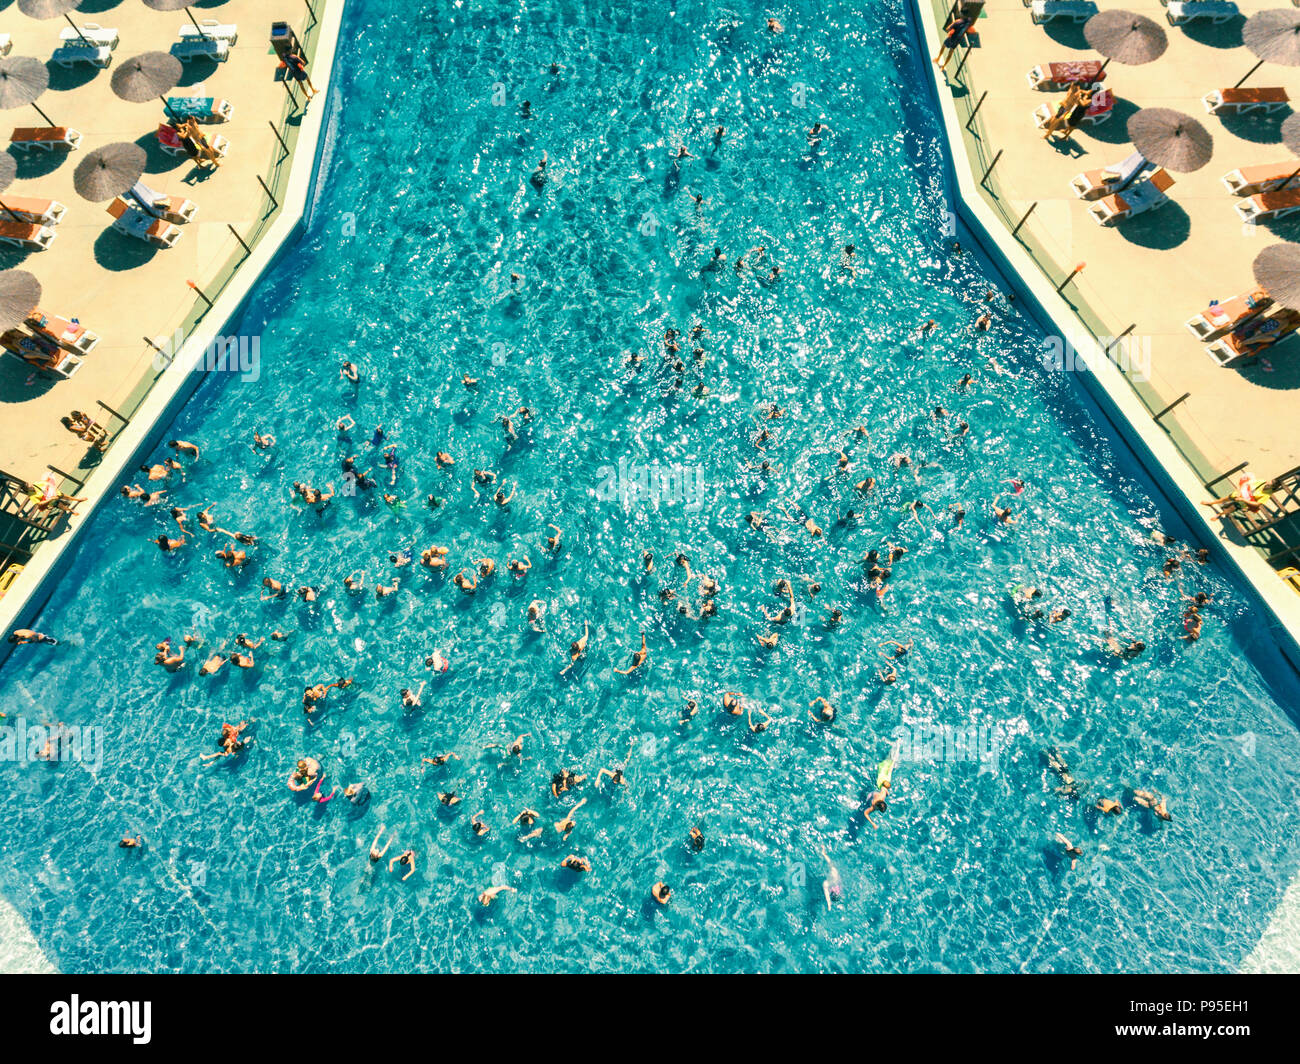 Crowded swimming pool Stock Photo